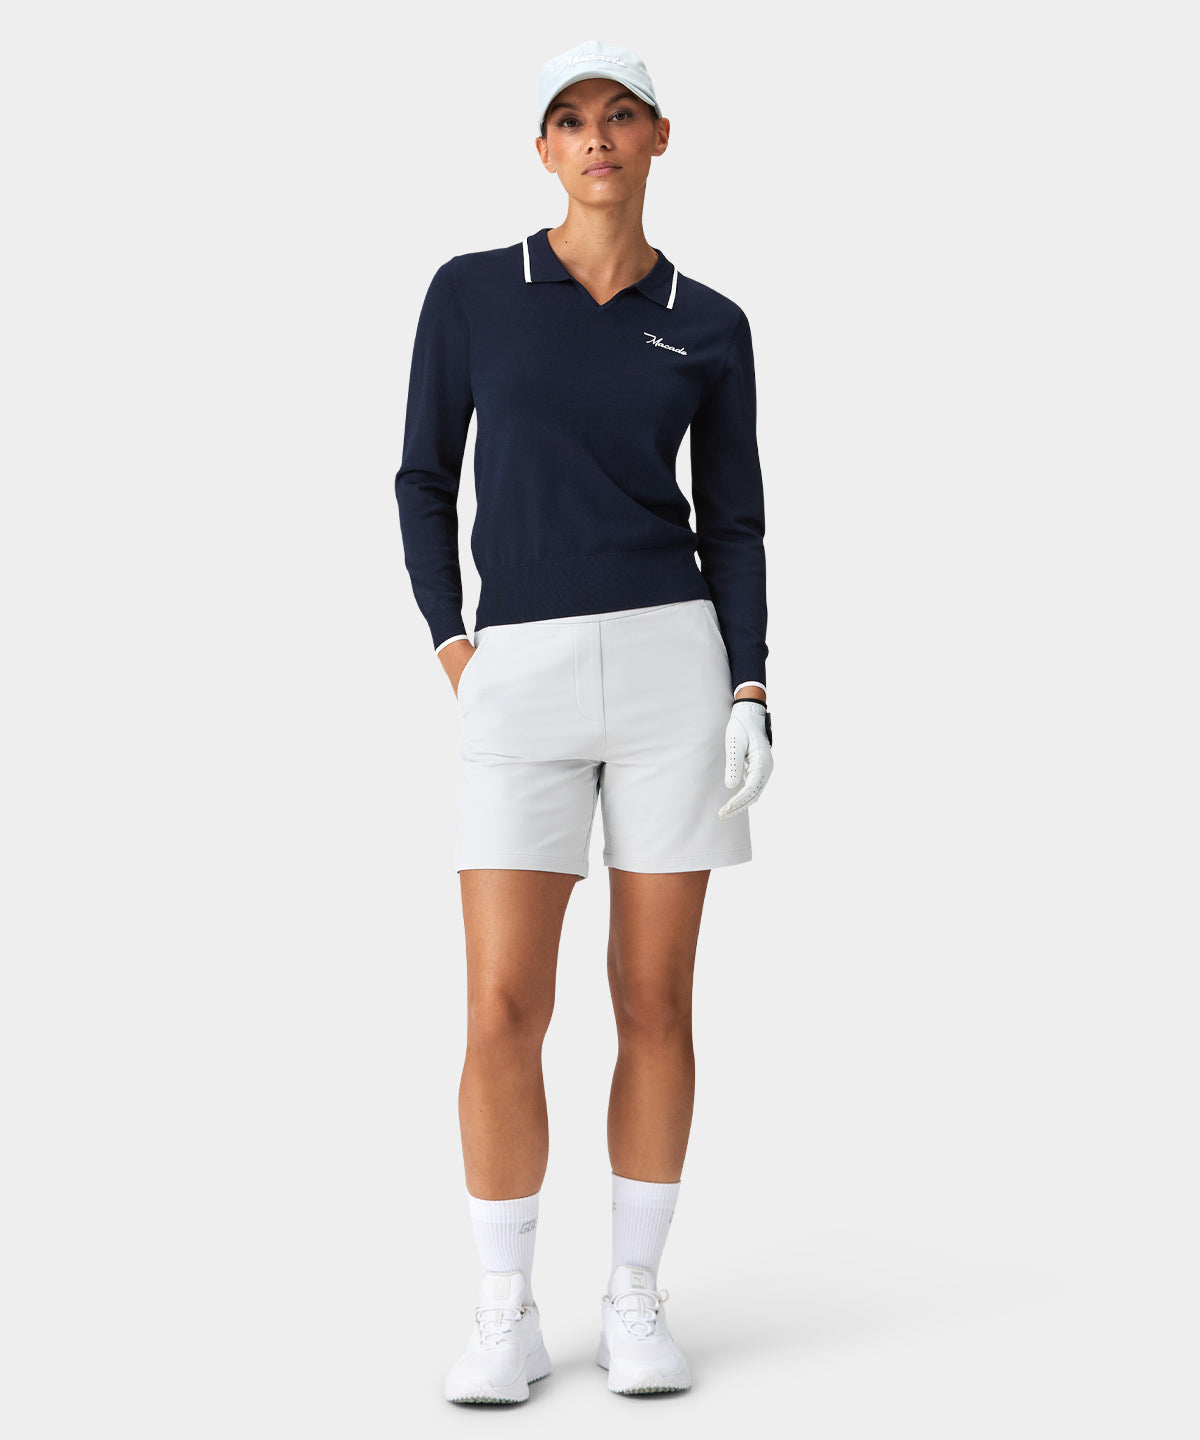 Ella Dark Blue Knit Top Macade Golf